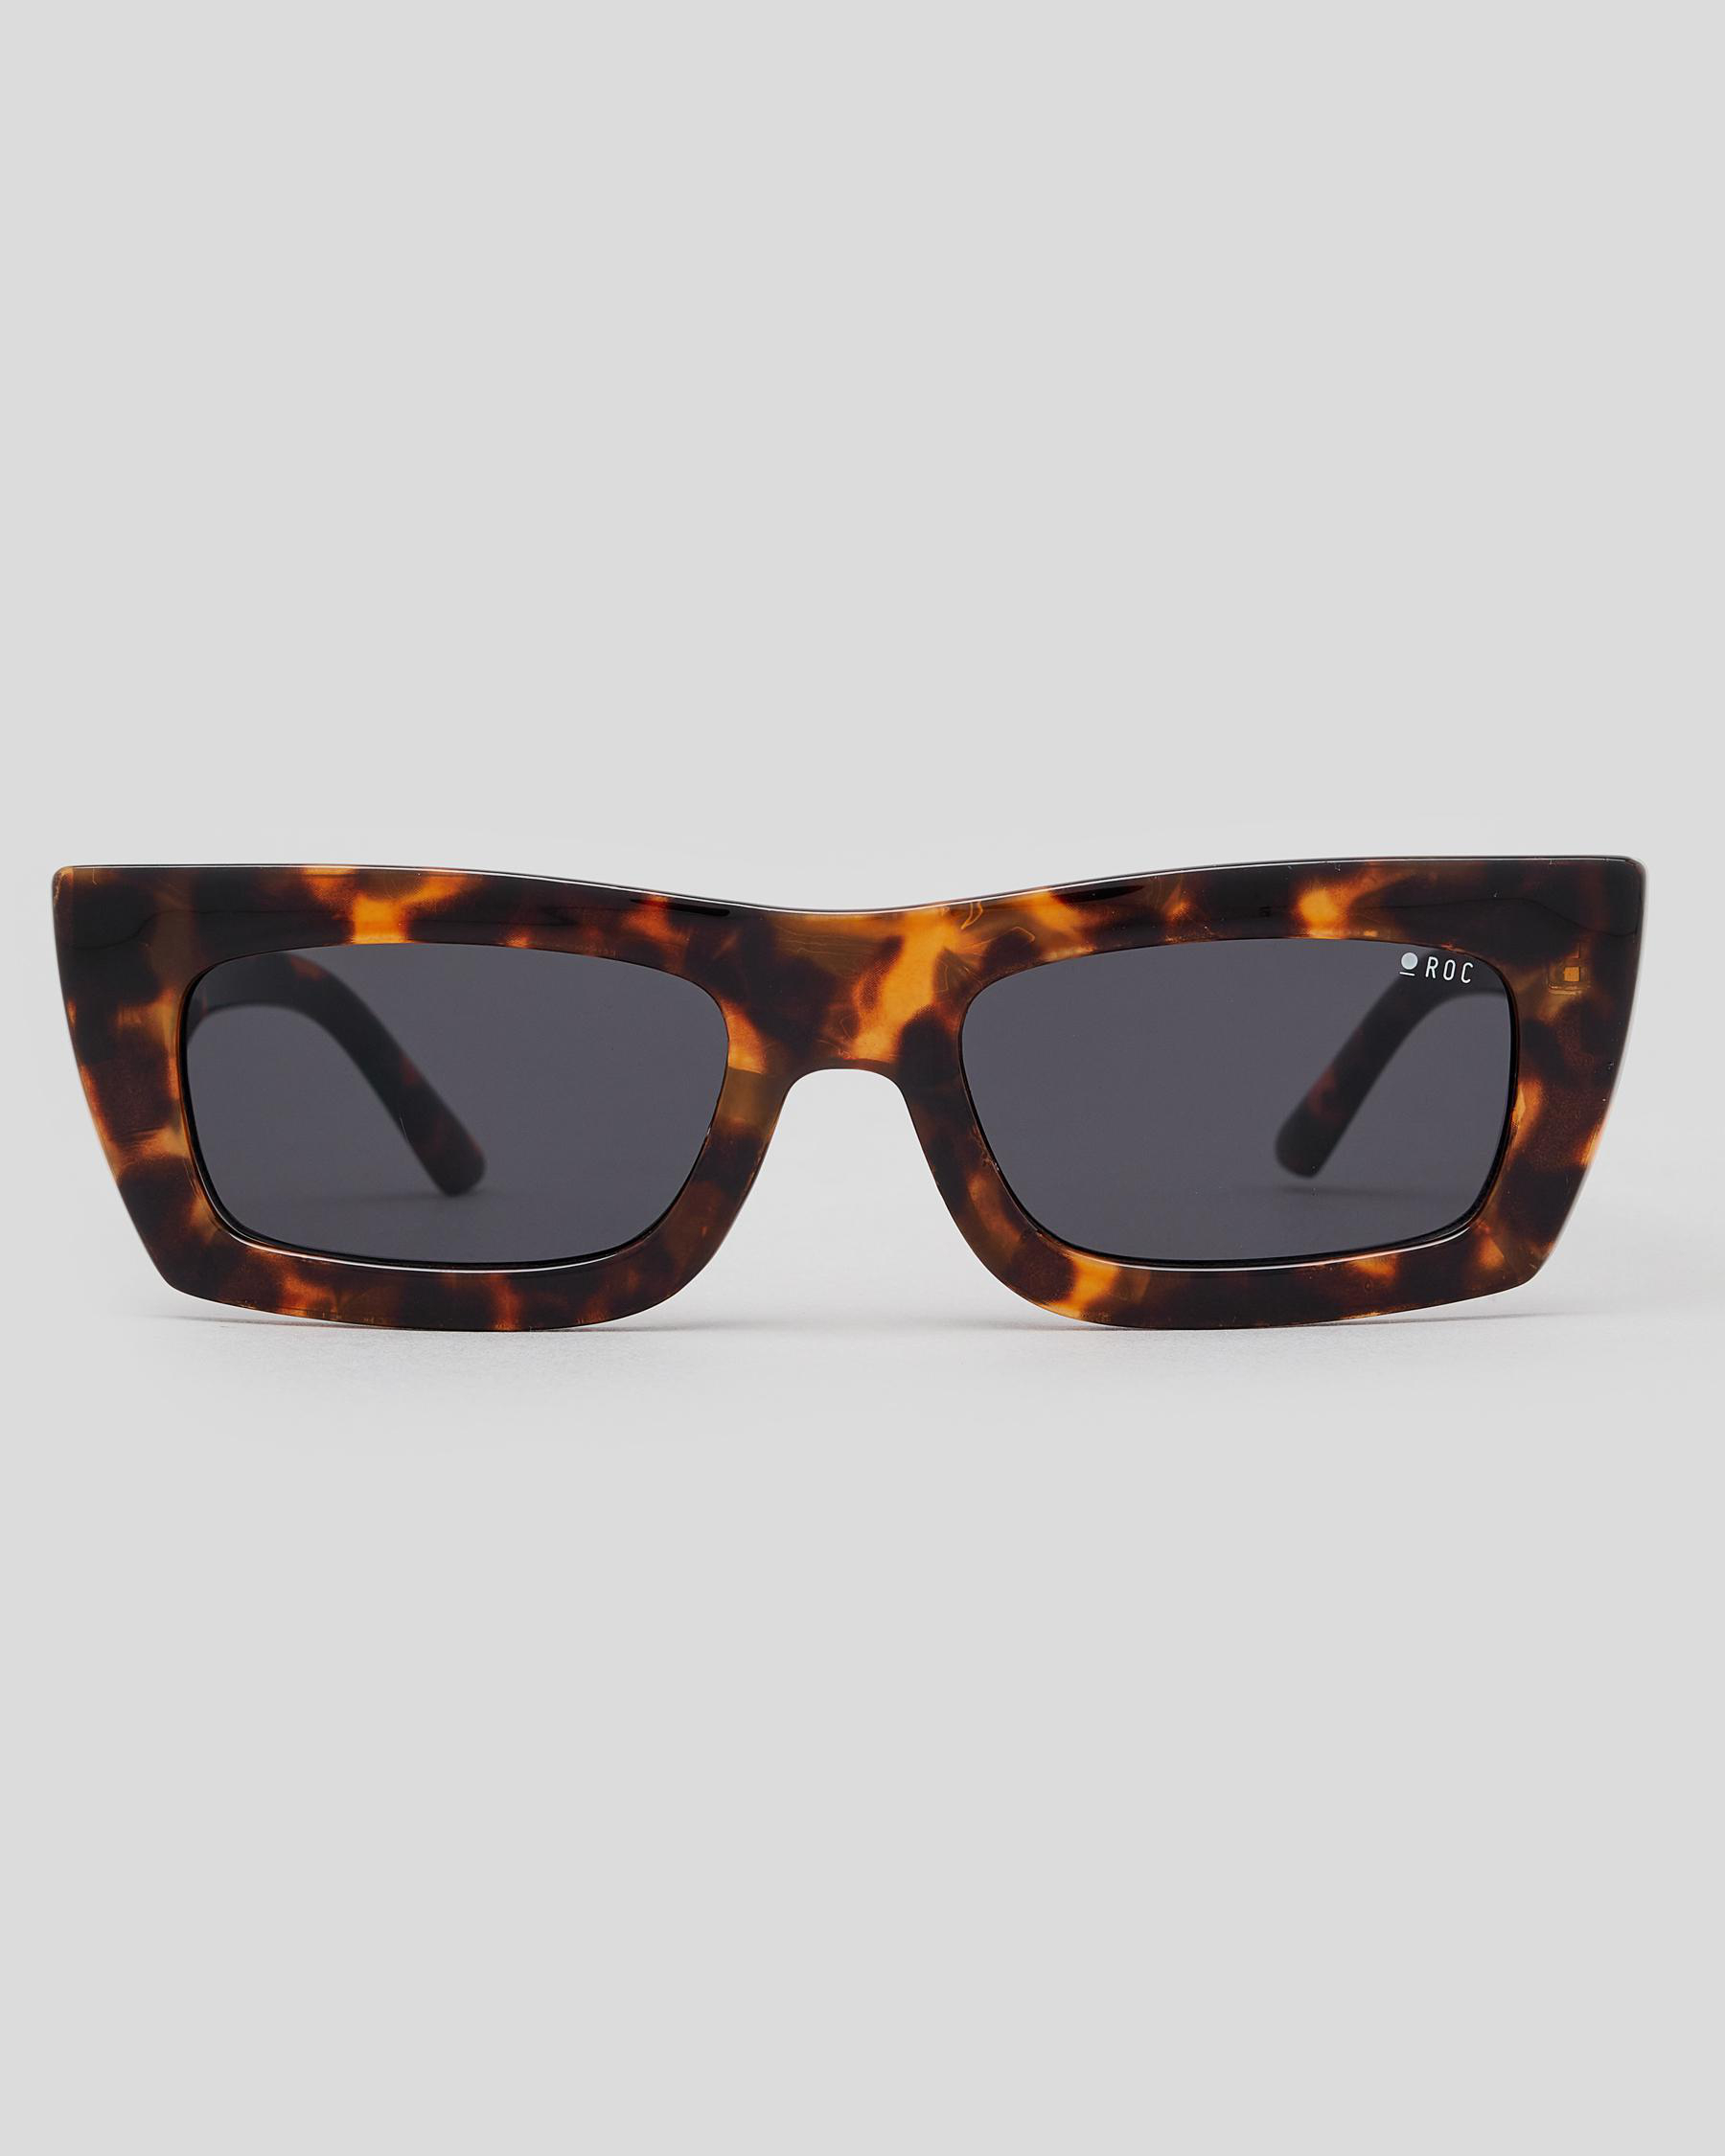 ROC Eyewear Girl Boss Sunglasses In Tortoiseshell - FREE* Shipping ...